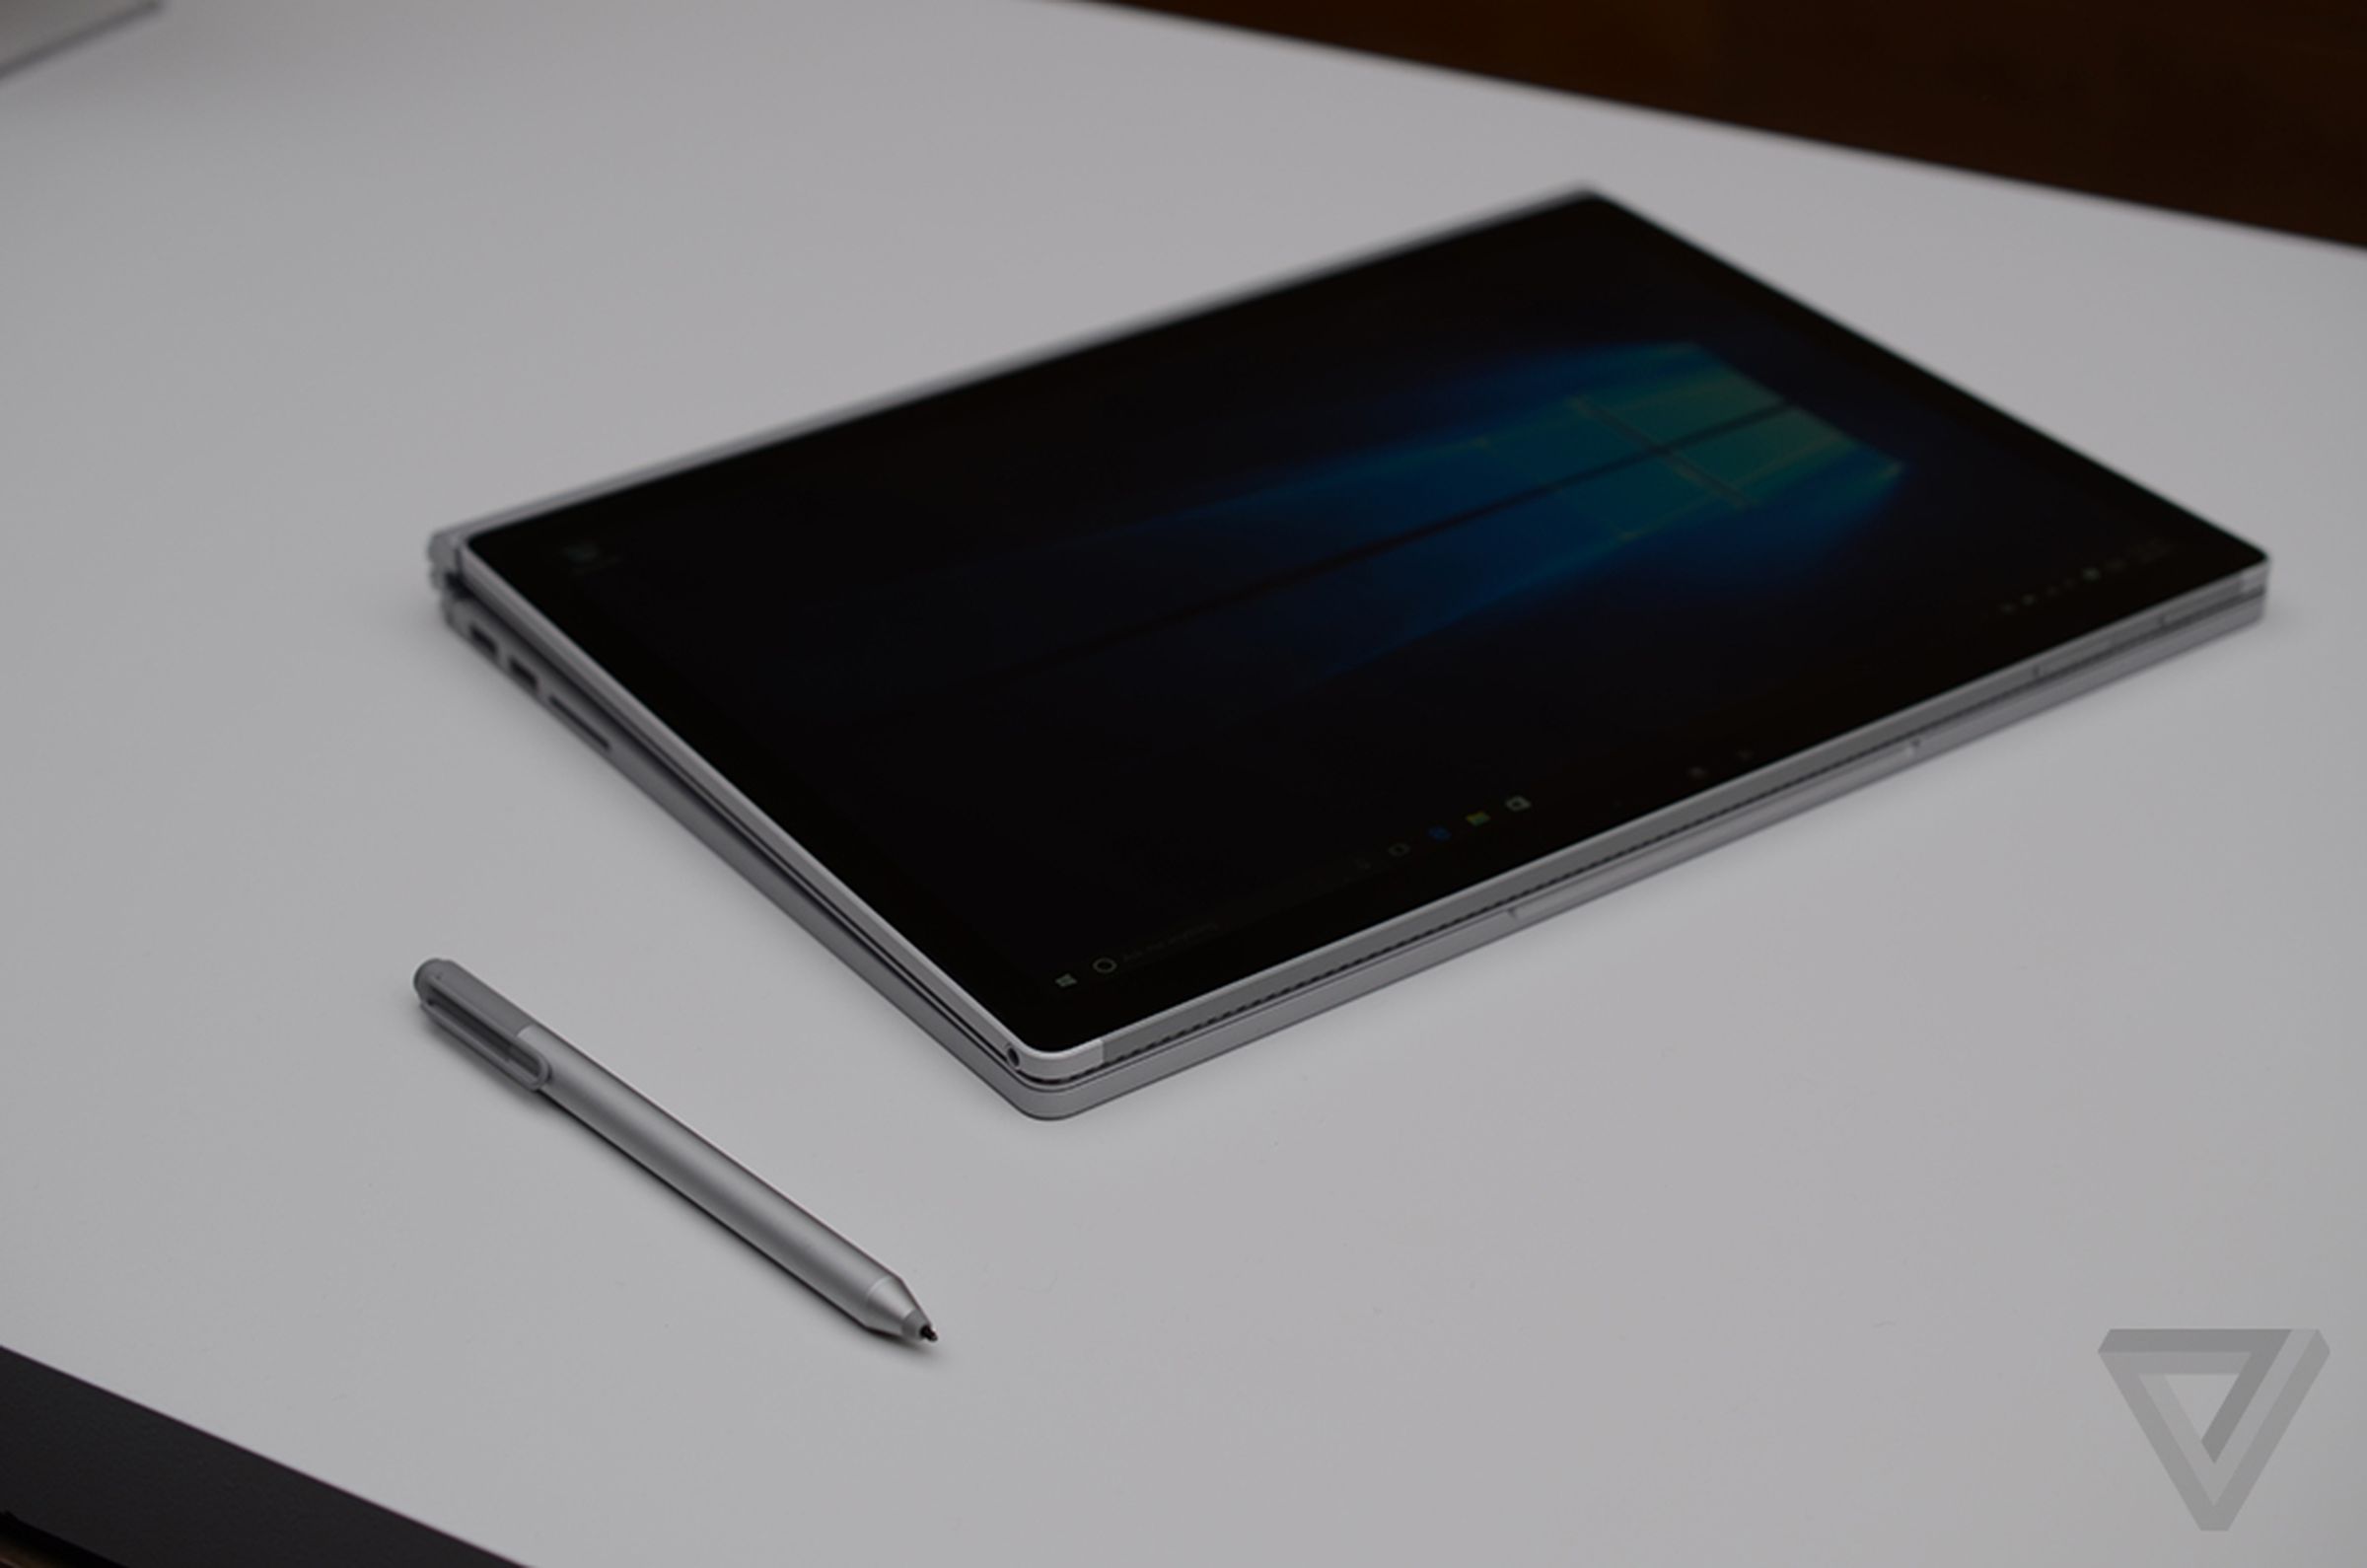 Microsoft Surface Laptop hands-on photos